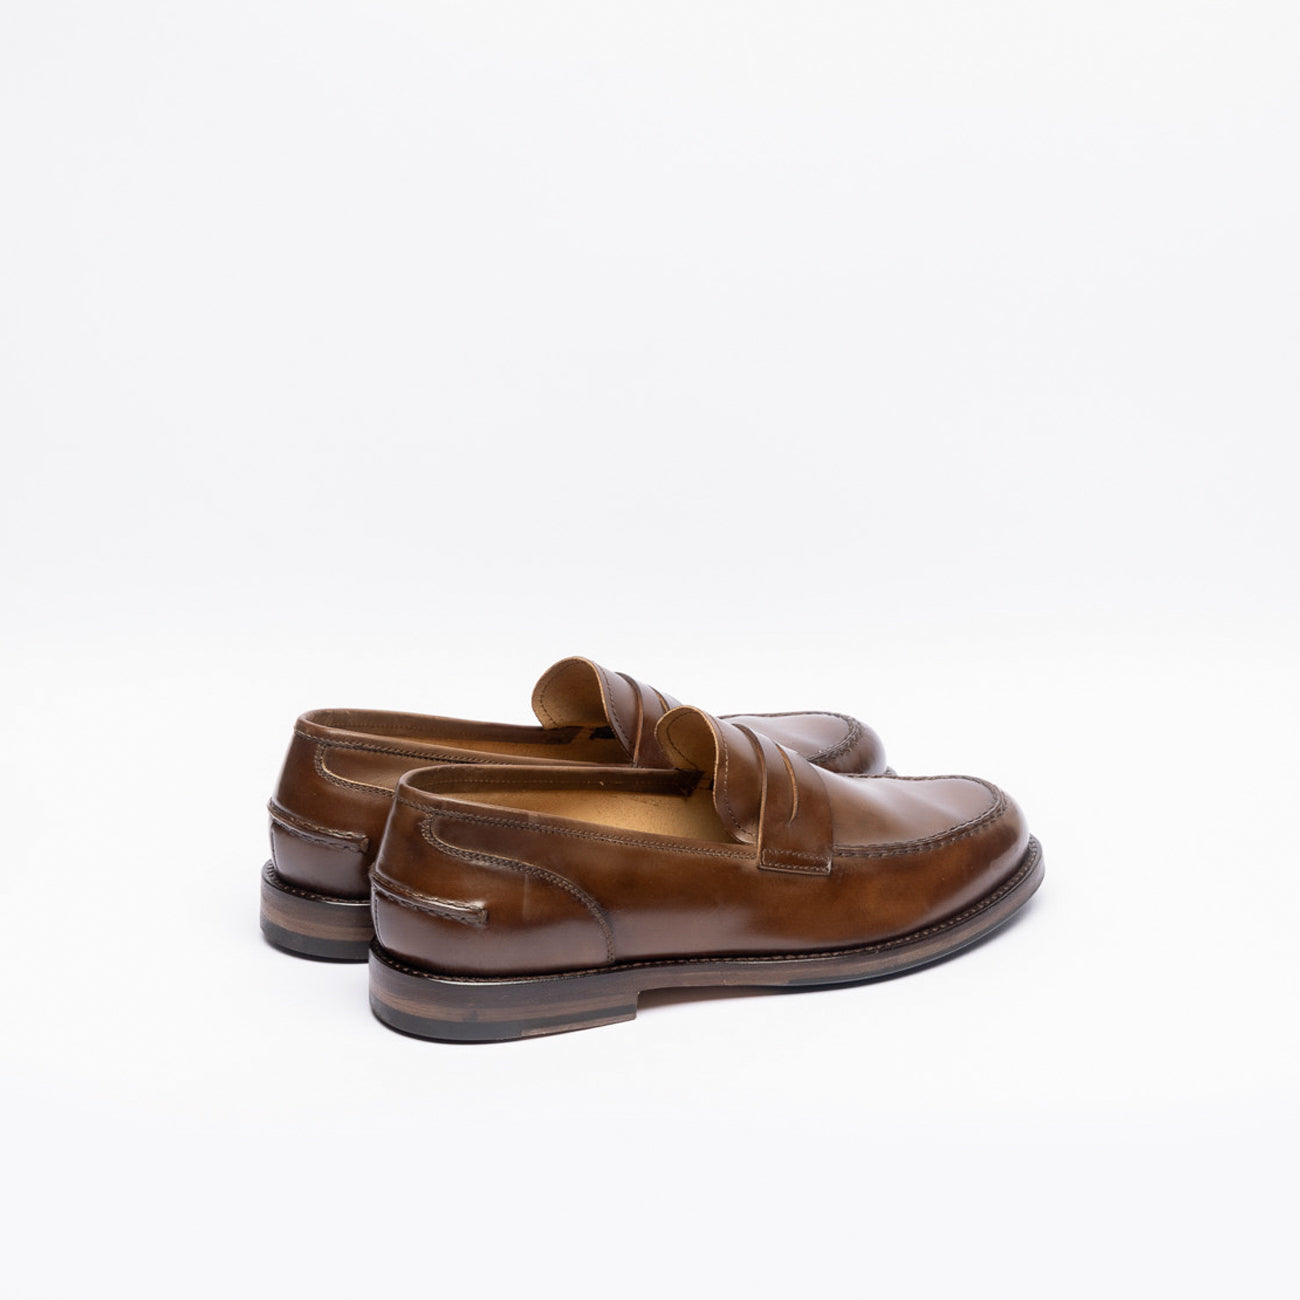 Penny loafer A. Fasciani Zen 57020 in brown leather